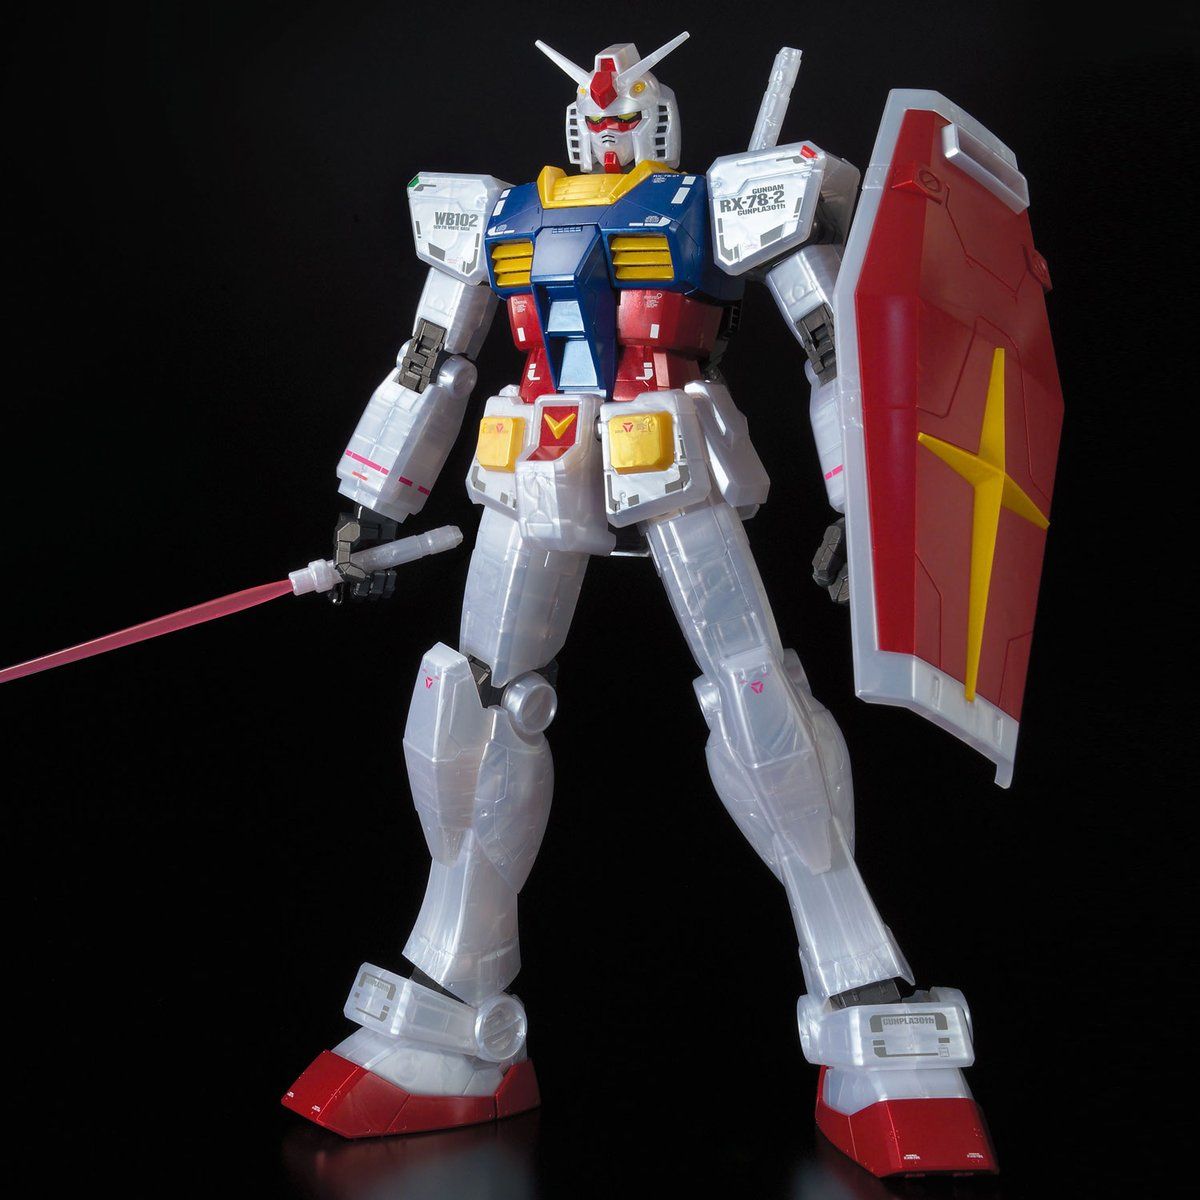 New Bandai Gundam Mega Size Plastic Model 1 48 Rx 78 2 Figure From Japan F S Science Fiction Gundam